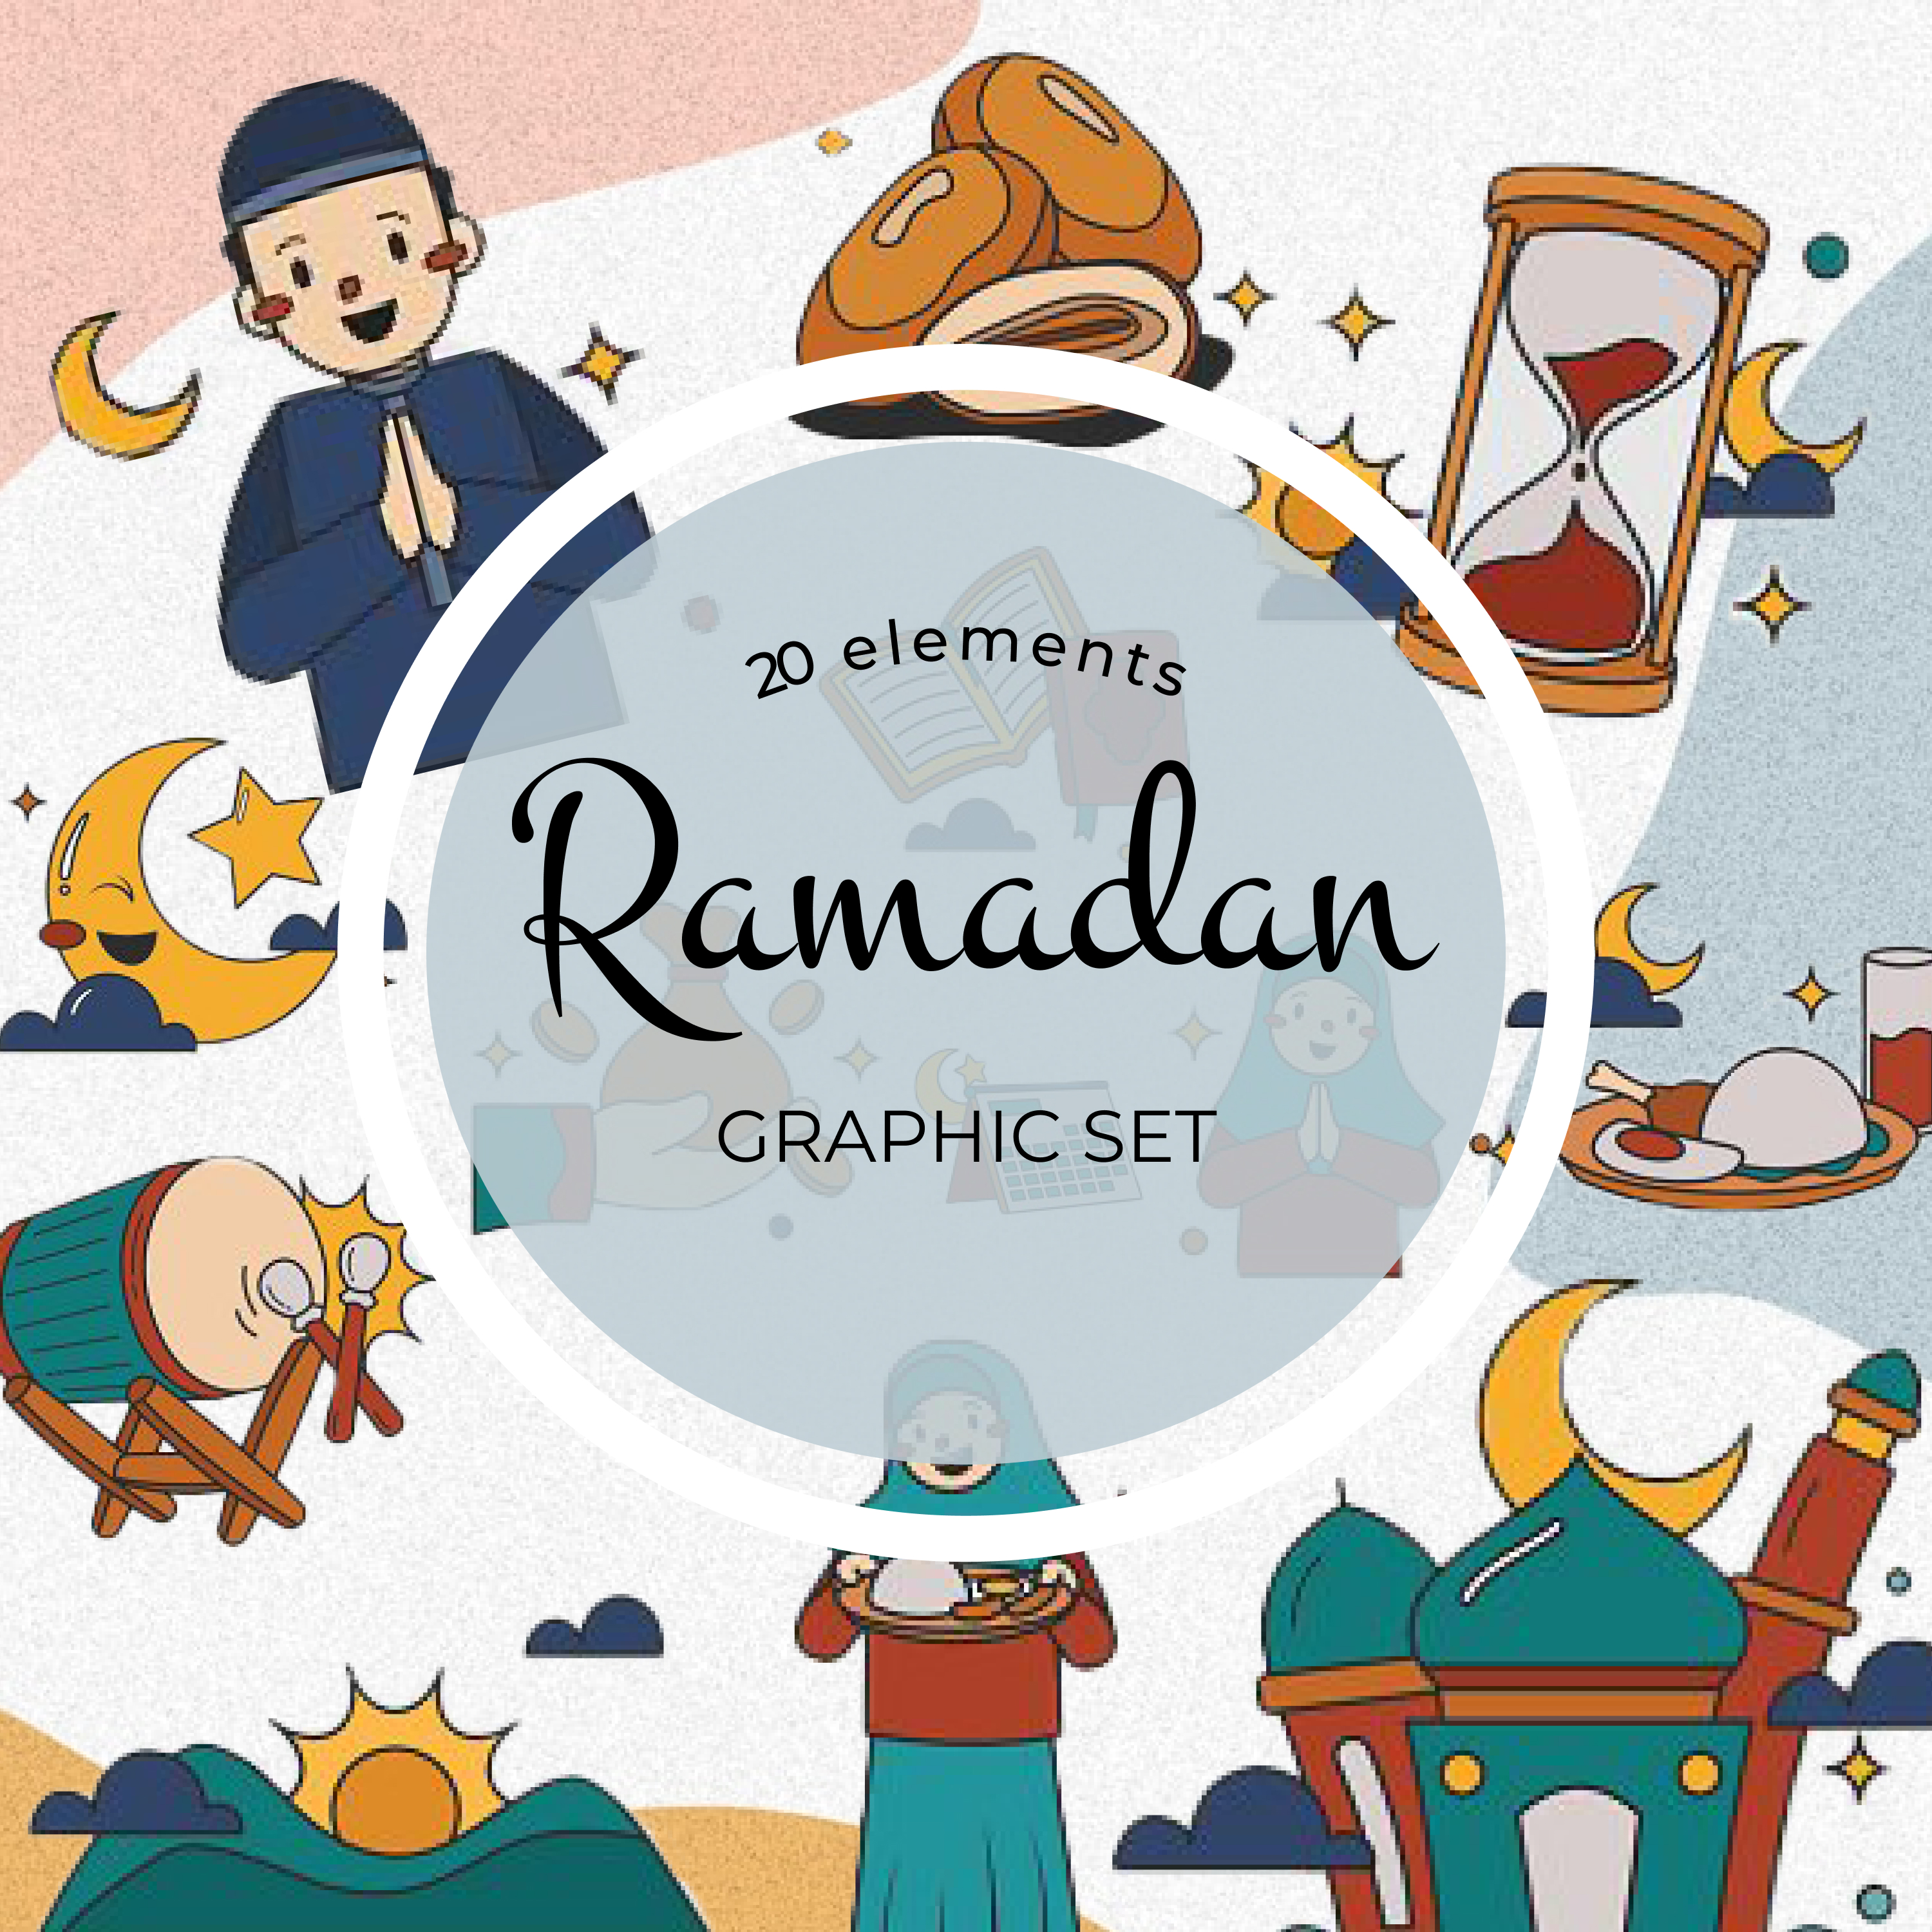 Prints of ramadan graphic set.